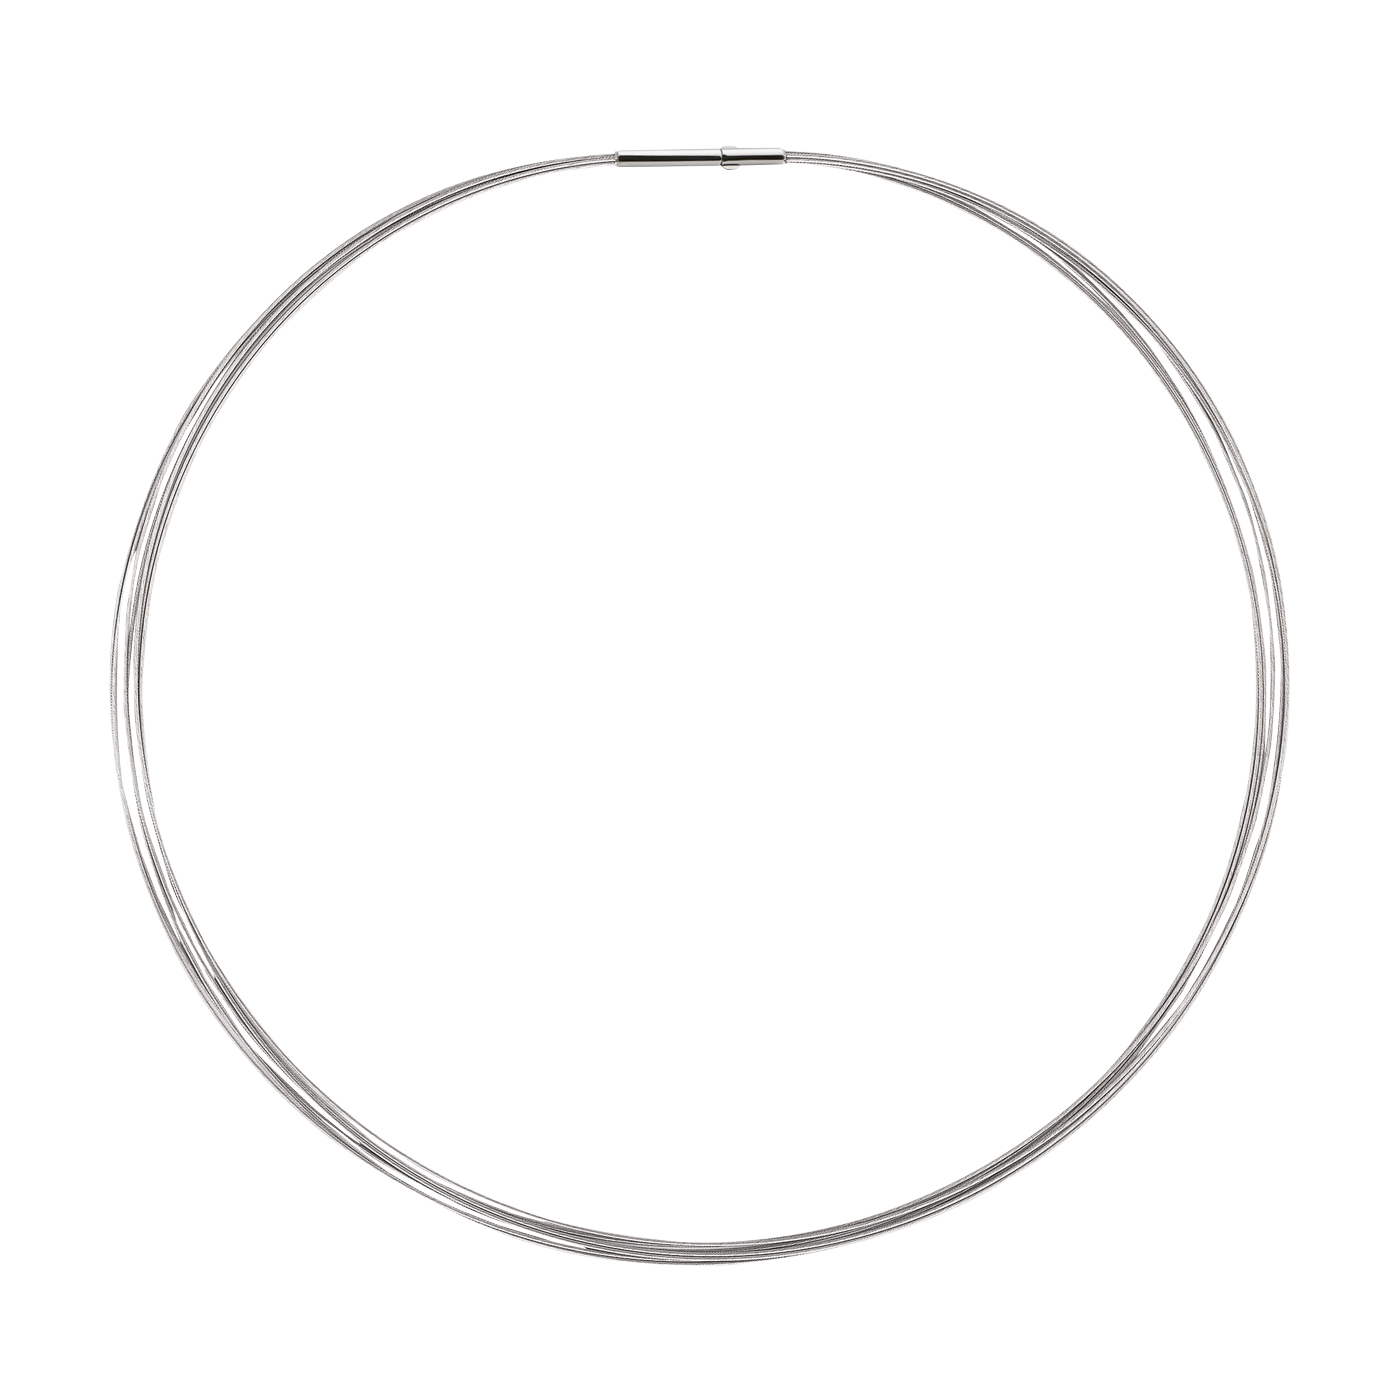 Rope Necklace, 7 Rows, Double Clip Closure, ø 0.5 mm, 45 cm - 1 piece